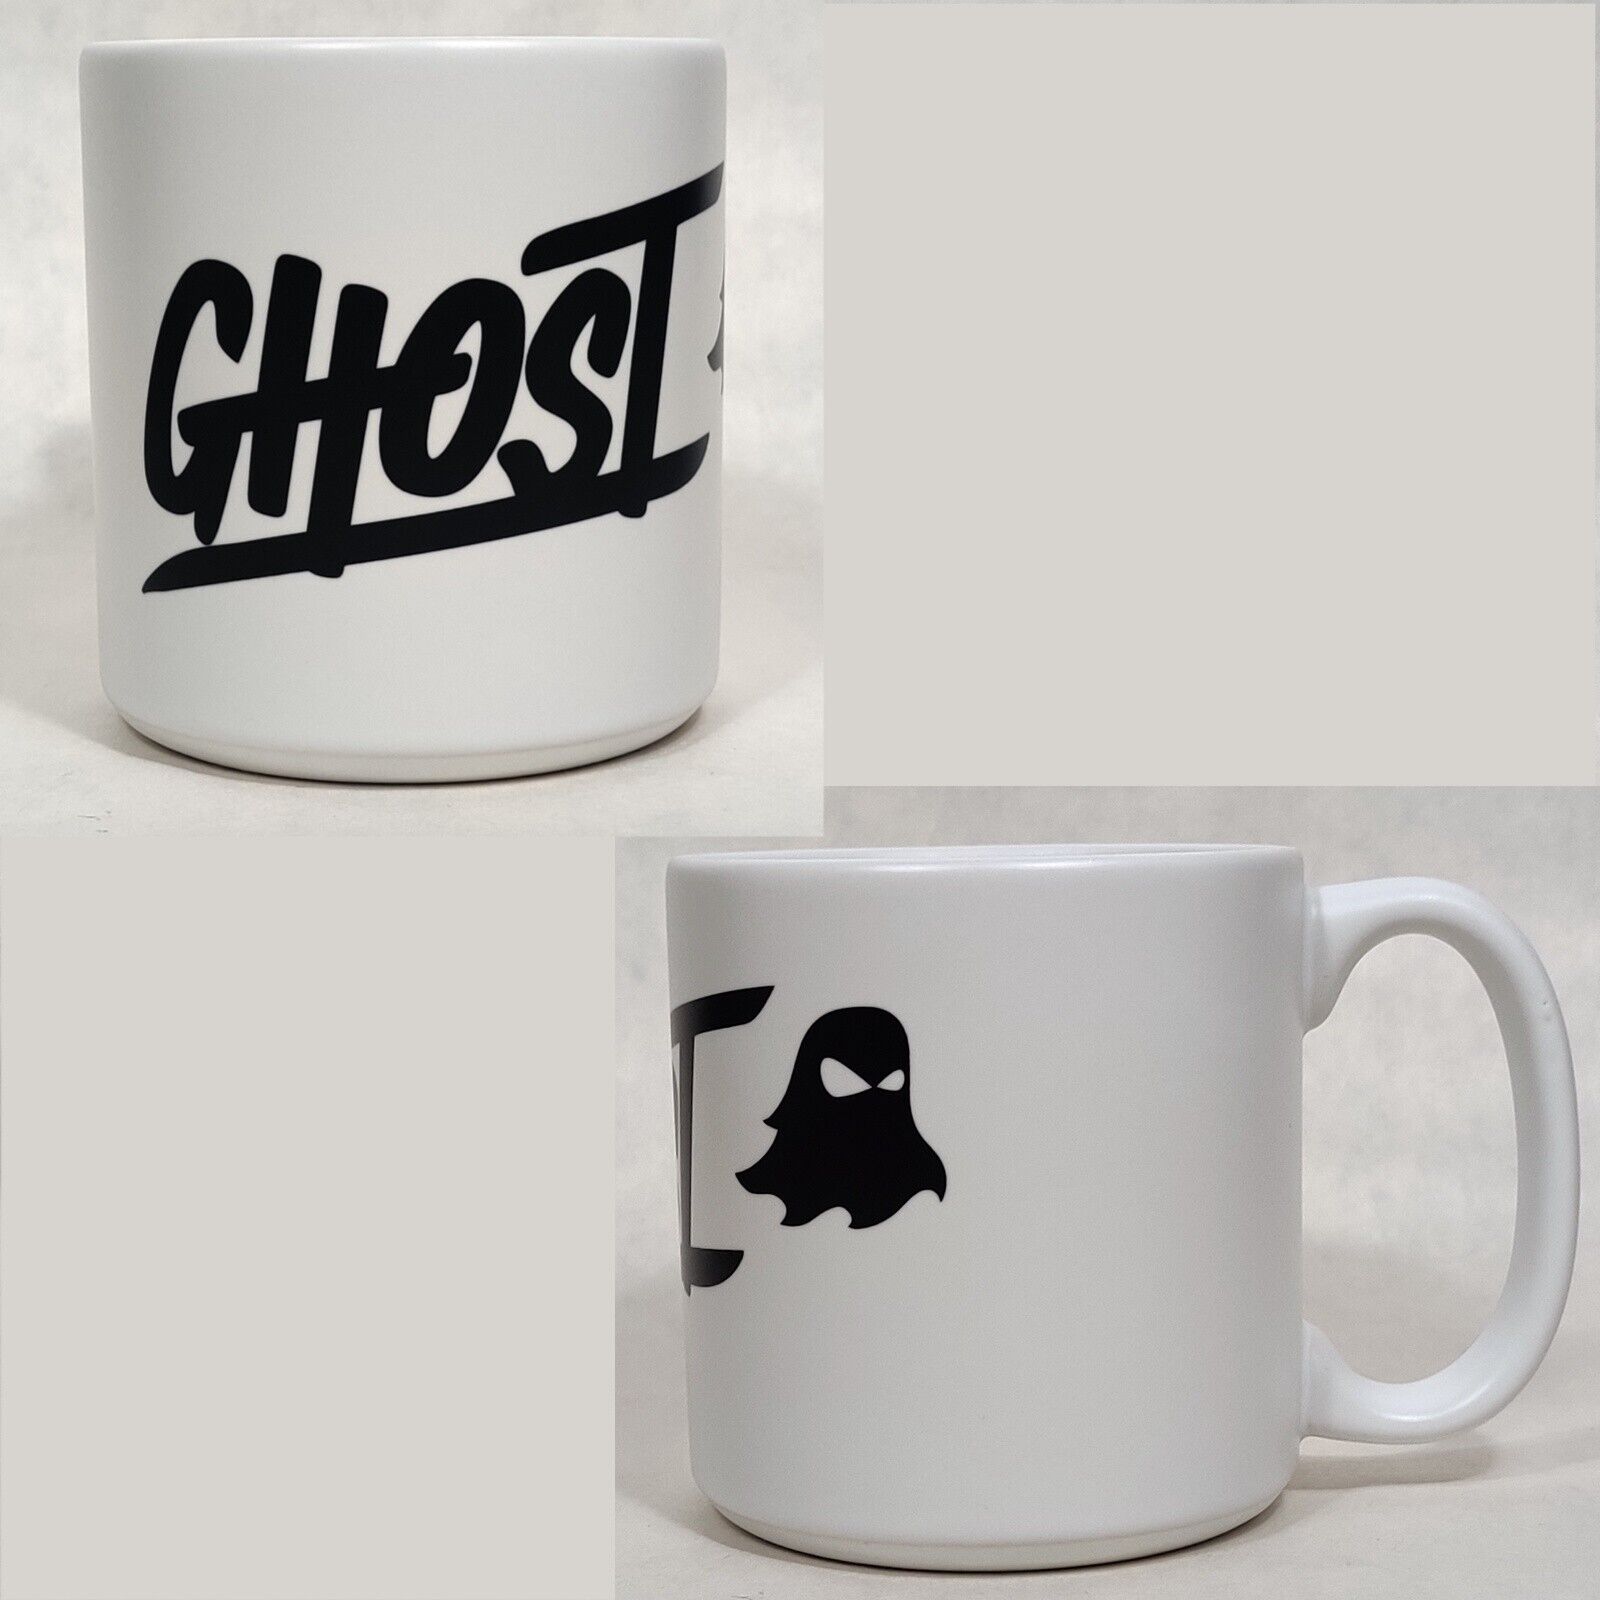 Ghost Lifestyle Mug White Matte with Black Logo Ceramic Workout Fitness RARE